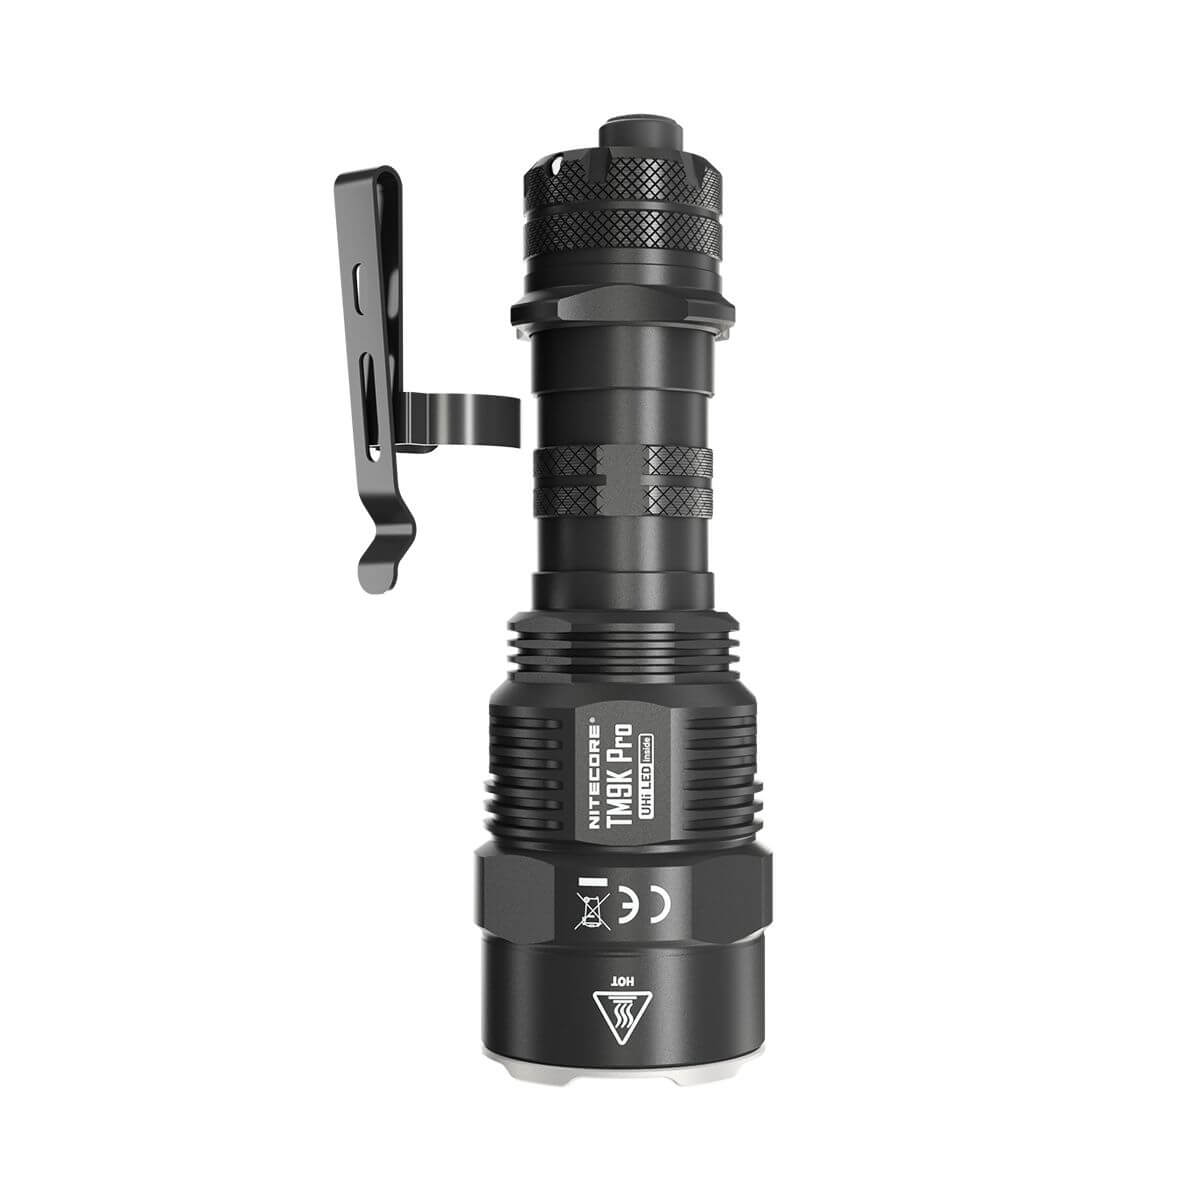 Nitecore TM9K Pro 9,900 Lumens Powerful Flashlight